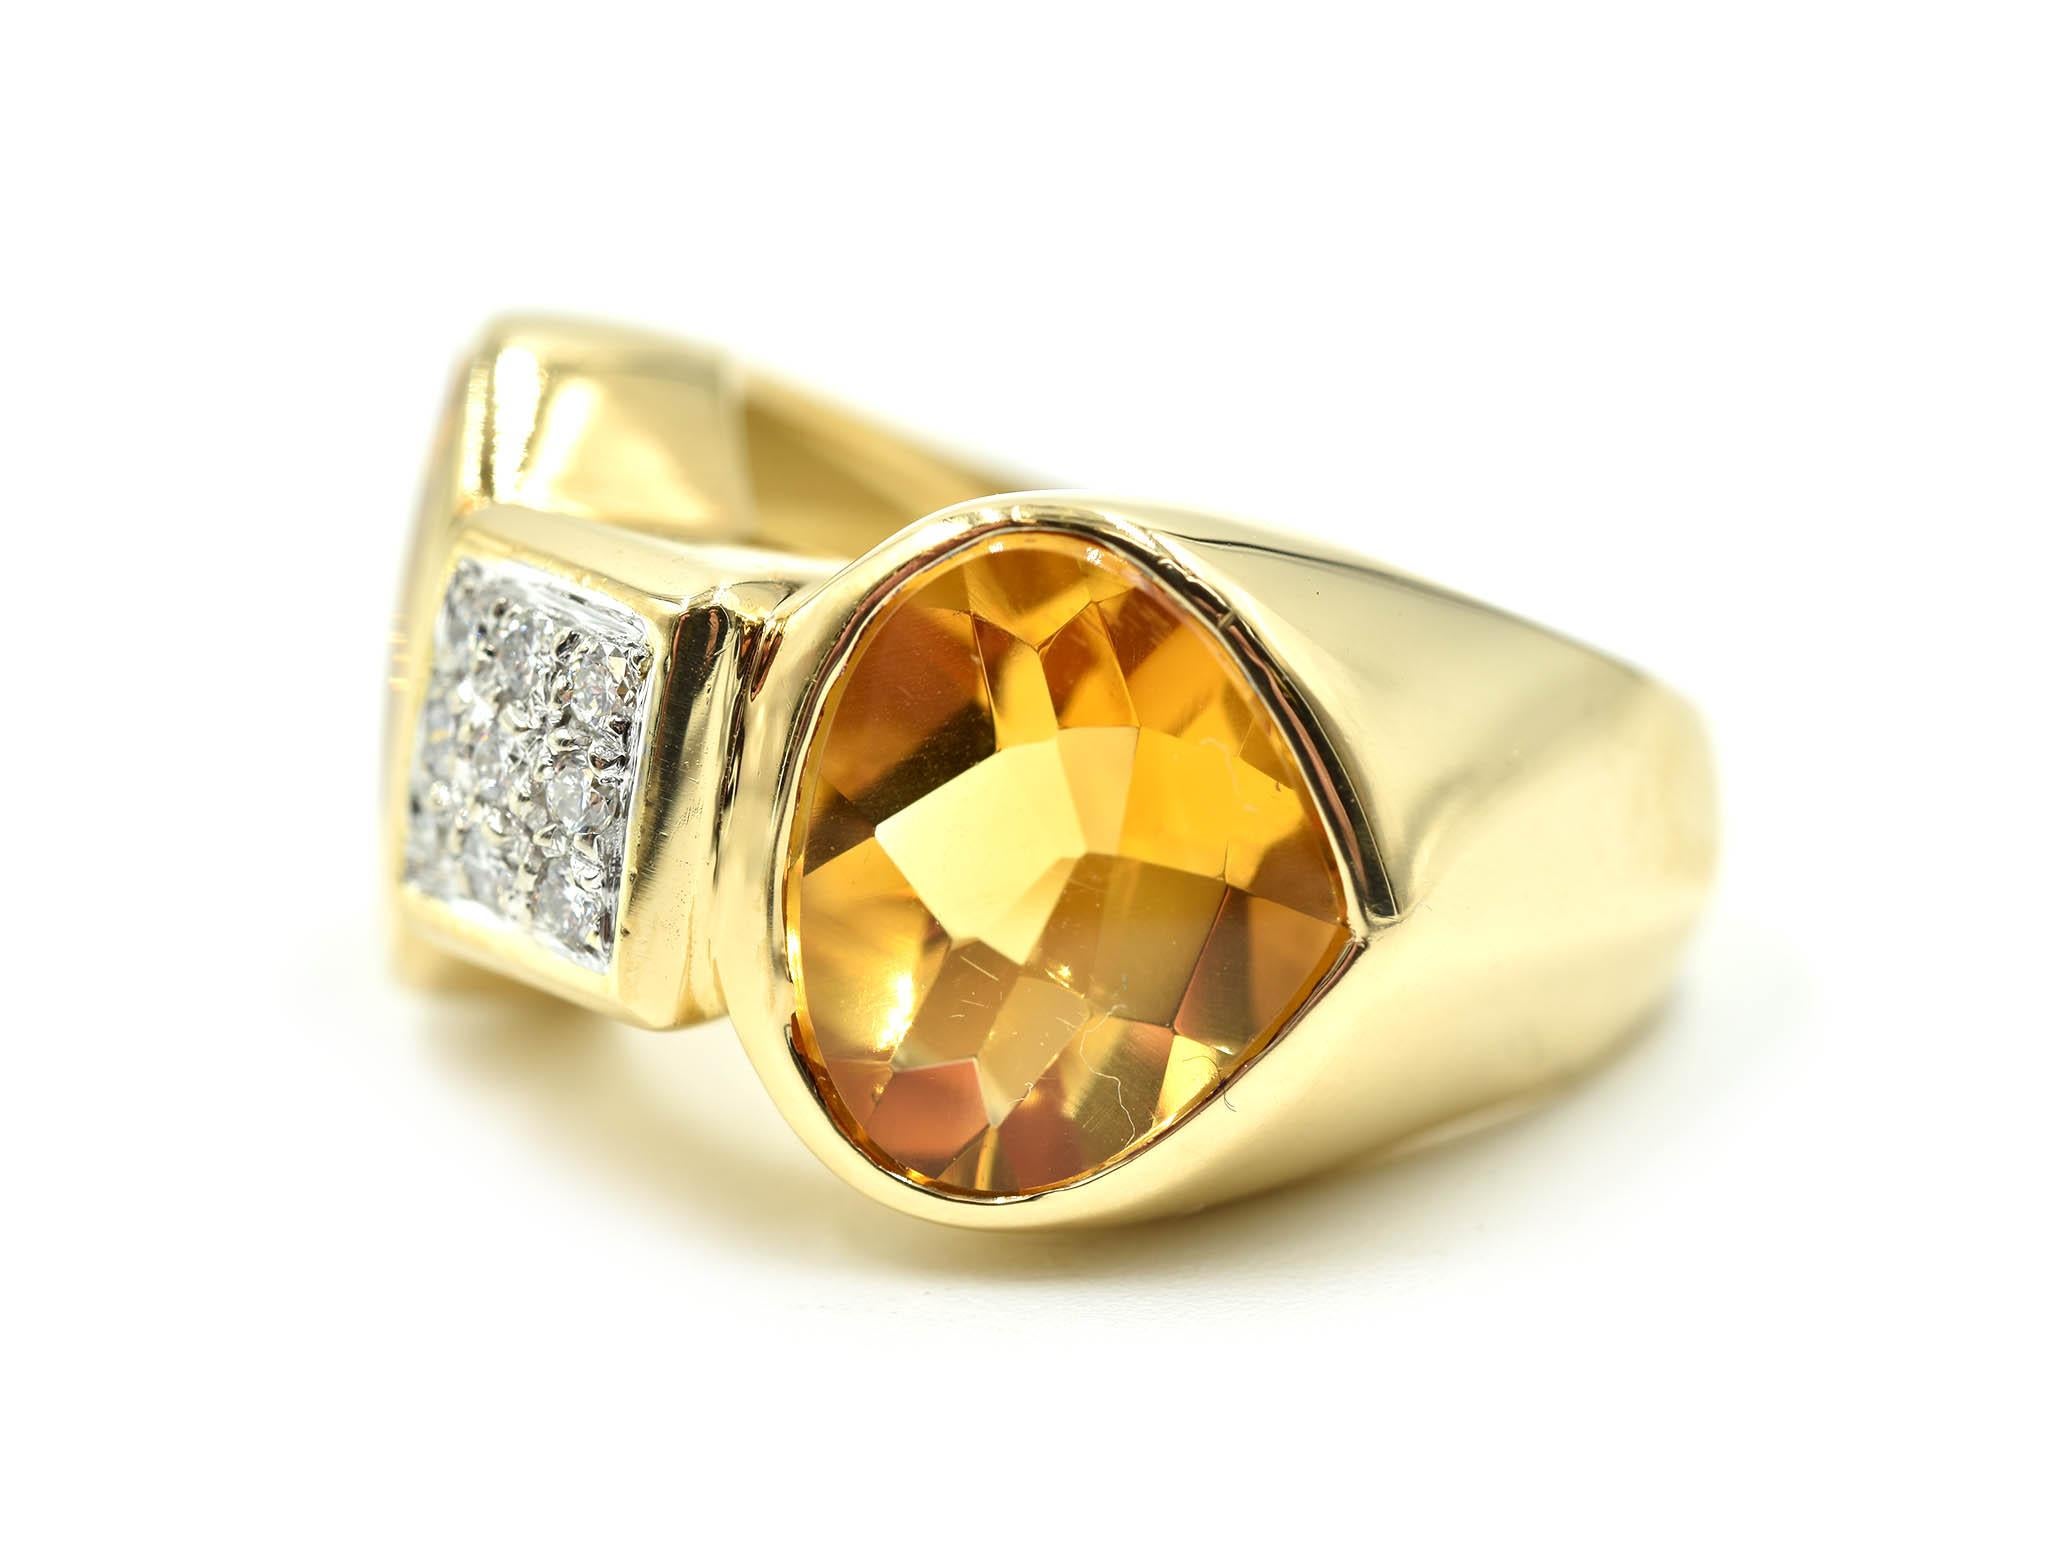 Modern 14k Yellow Gold 0.15cttw Round Diamond & Citrine Fashion Ring Signed “Antonili